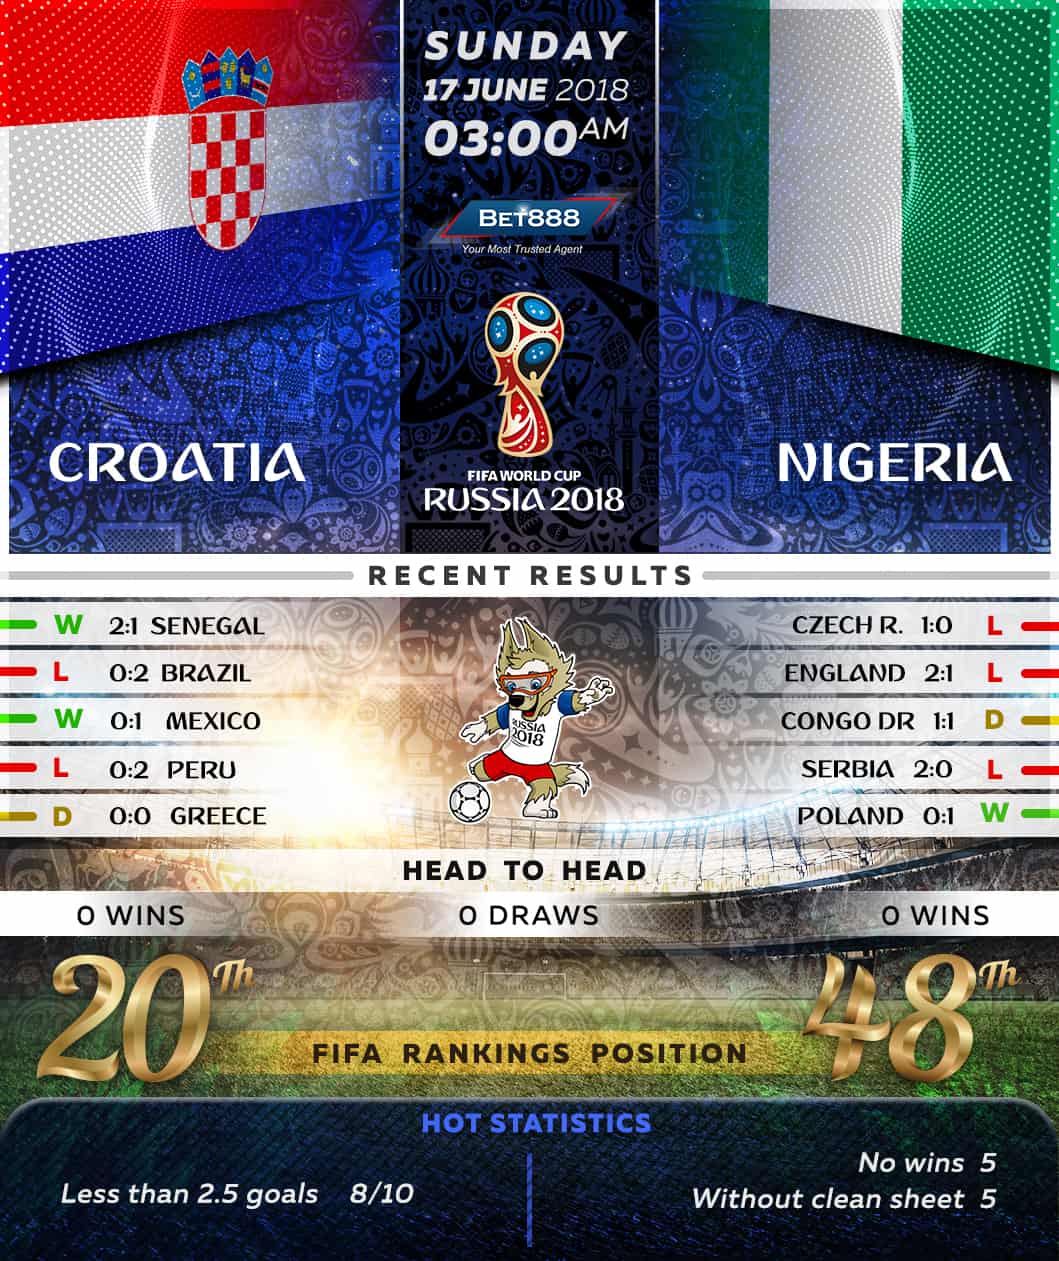 Croatia vs Nigeria 17/06/18